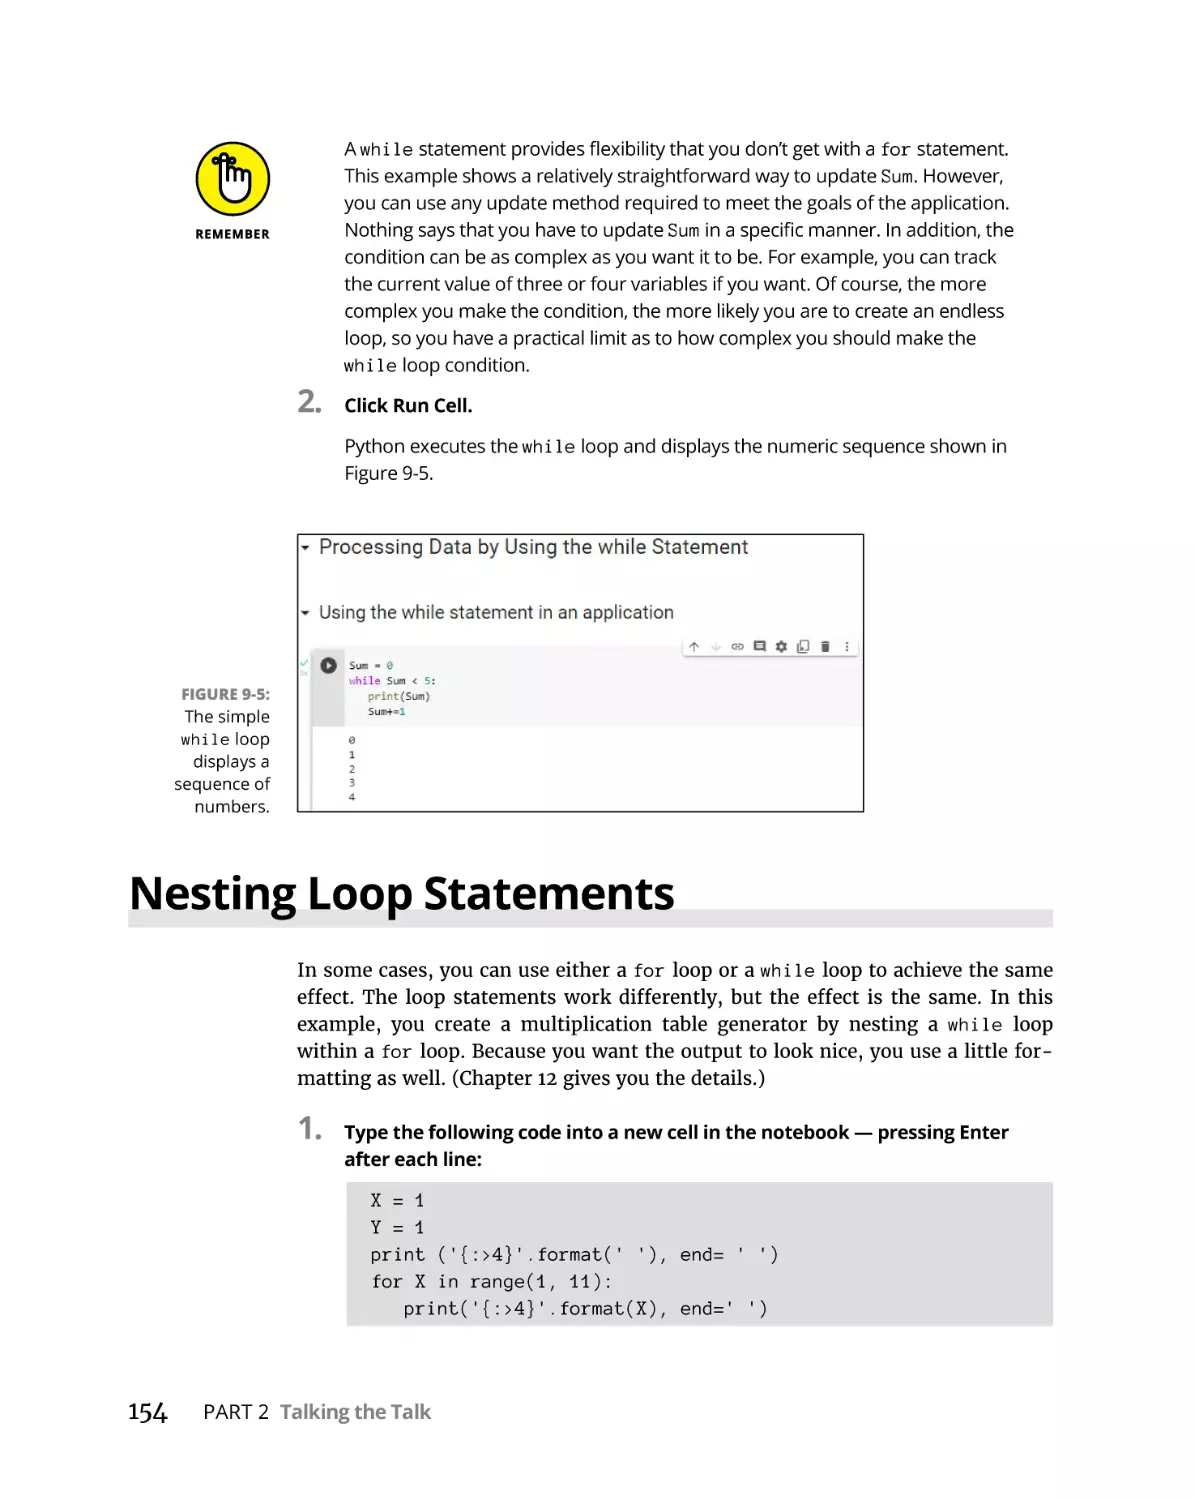 Nesting Loop Statements